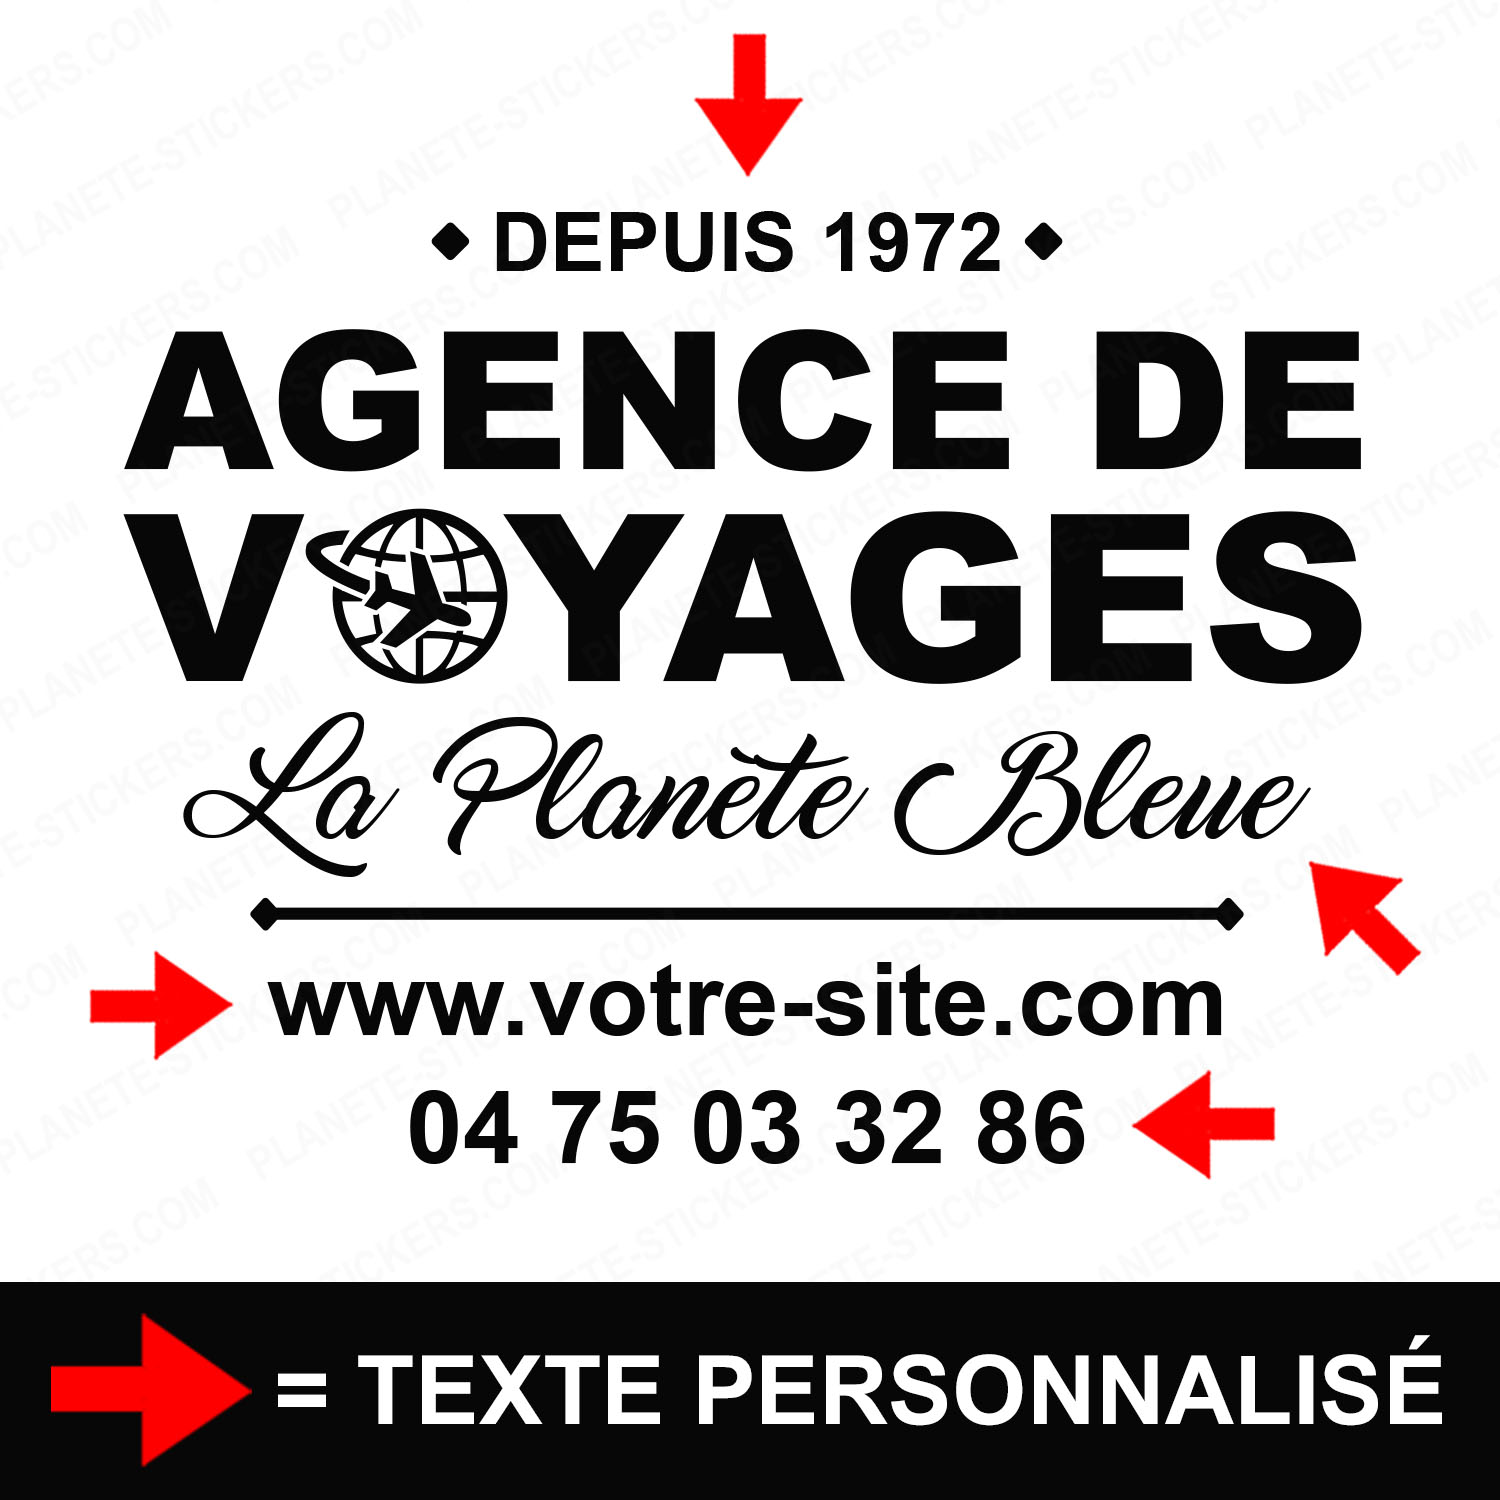 ref13agencedevoyagesvitrine-stickers-agence-de-voyages-vitrine-sticker-voyagiste-personnalisé-autocollant-vitrophanie-agent-voyage-vitre-logo-terre-avion-2